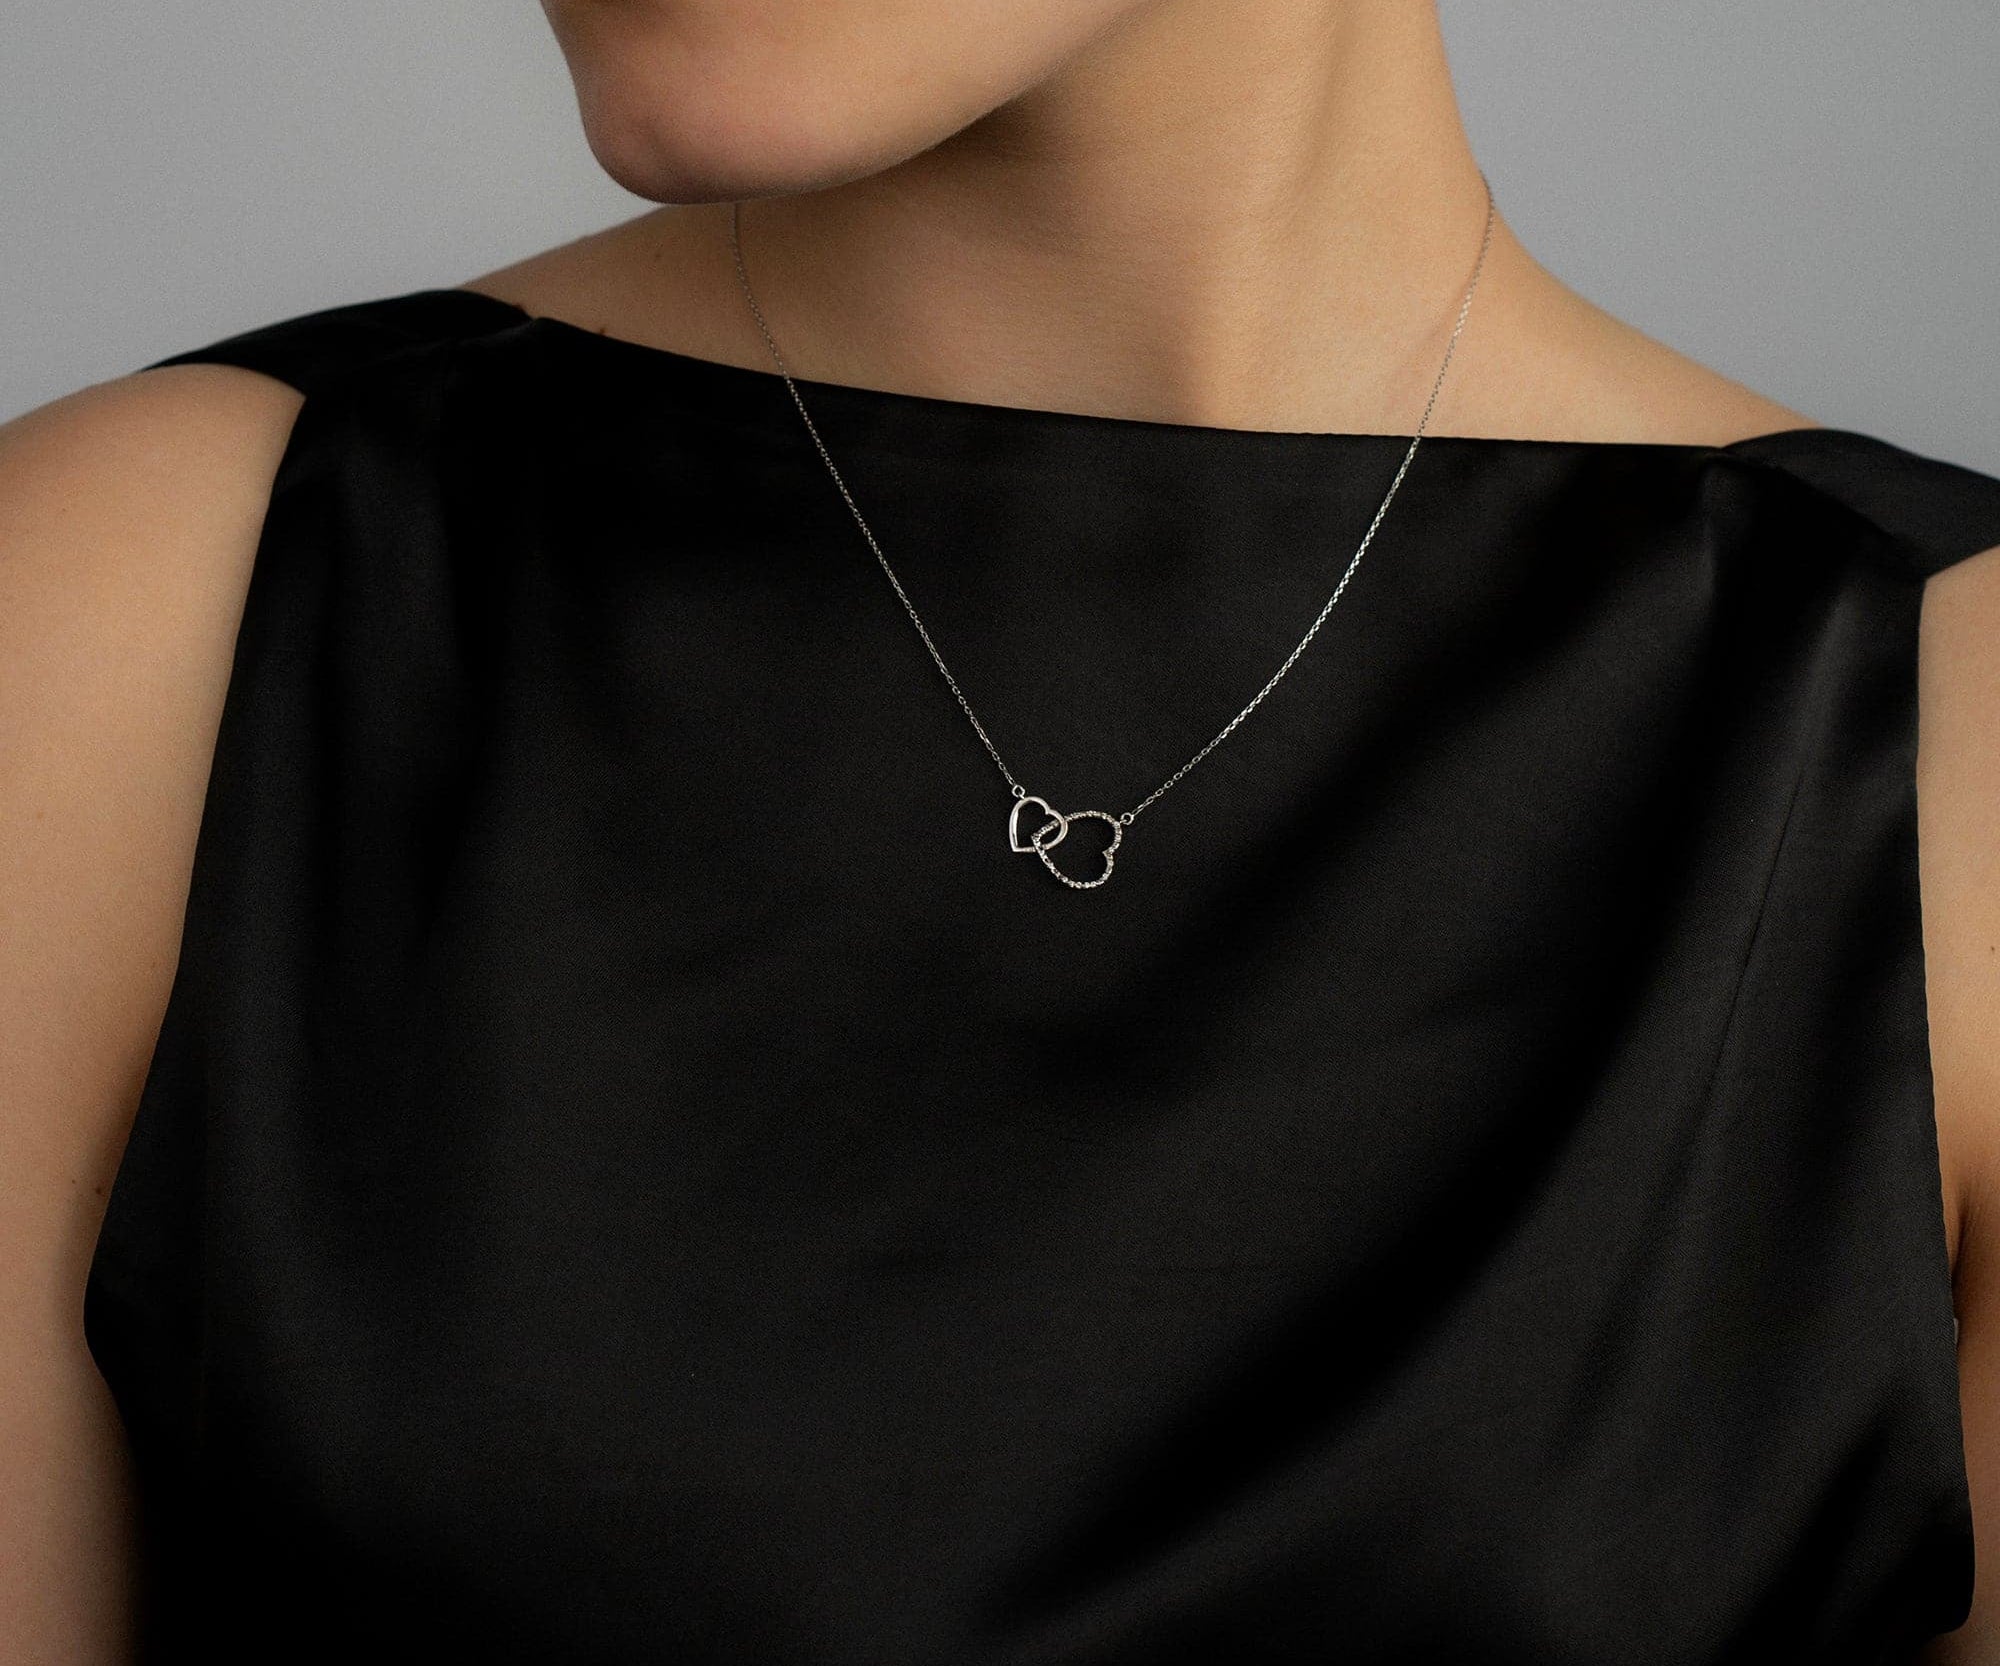 Gelin Heart Shaped Lock and Key Pendant Necklace in 14k Gold – Gelin Diamond